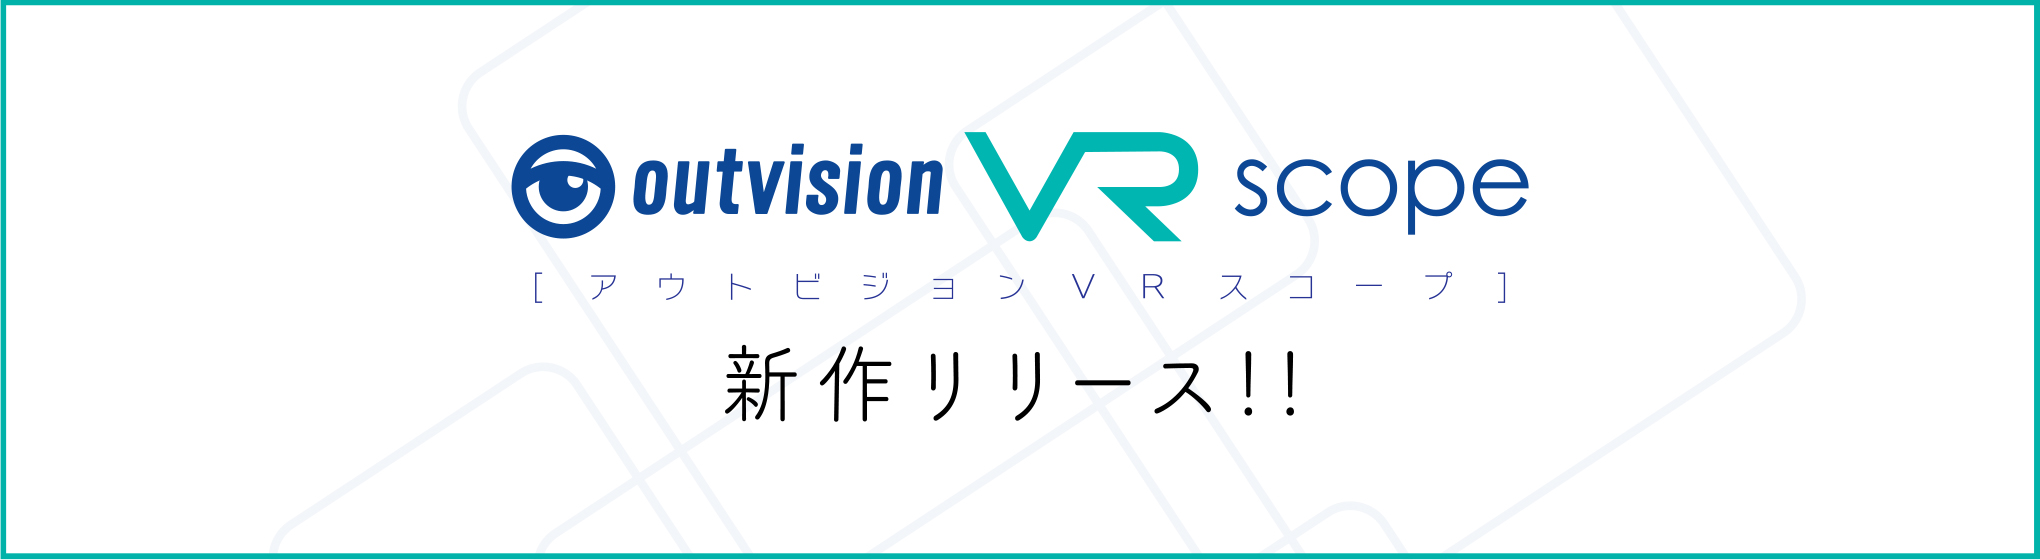 outvision VR scope アウトビジョンVRスコープ